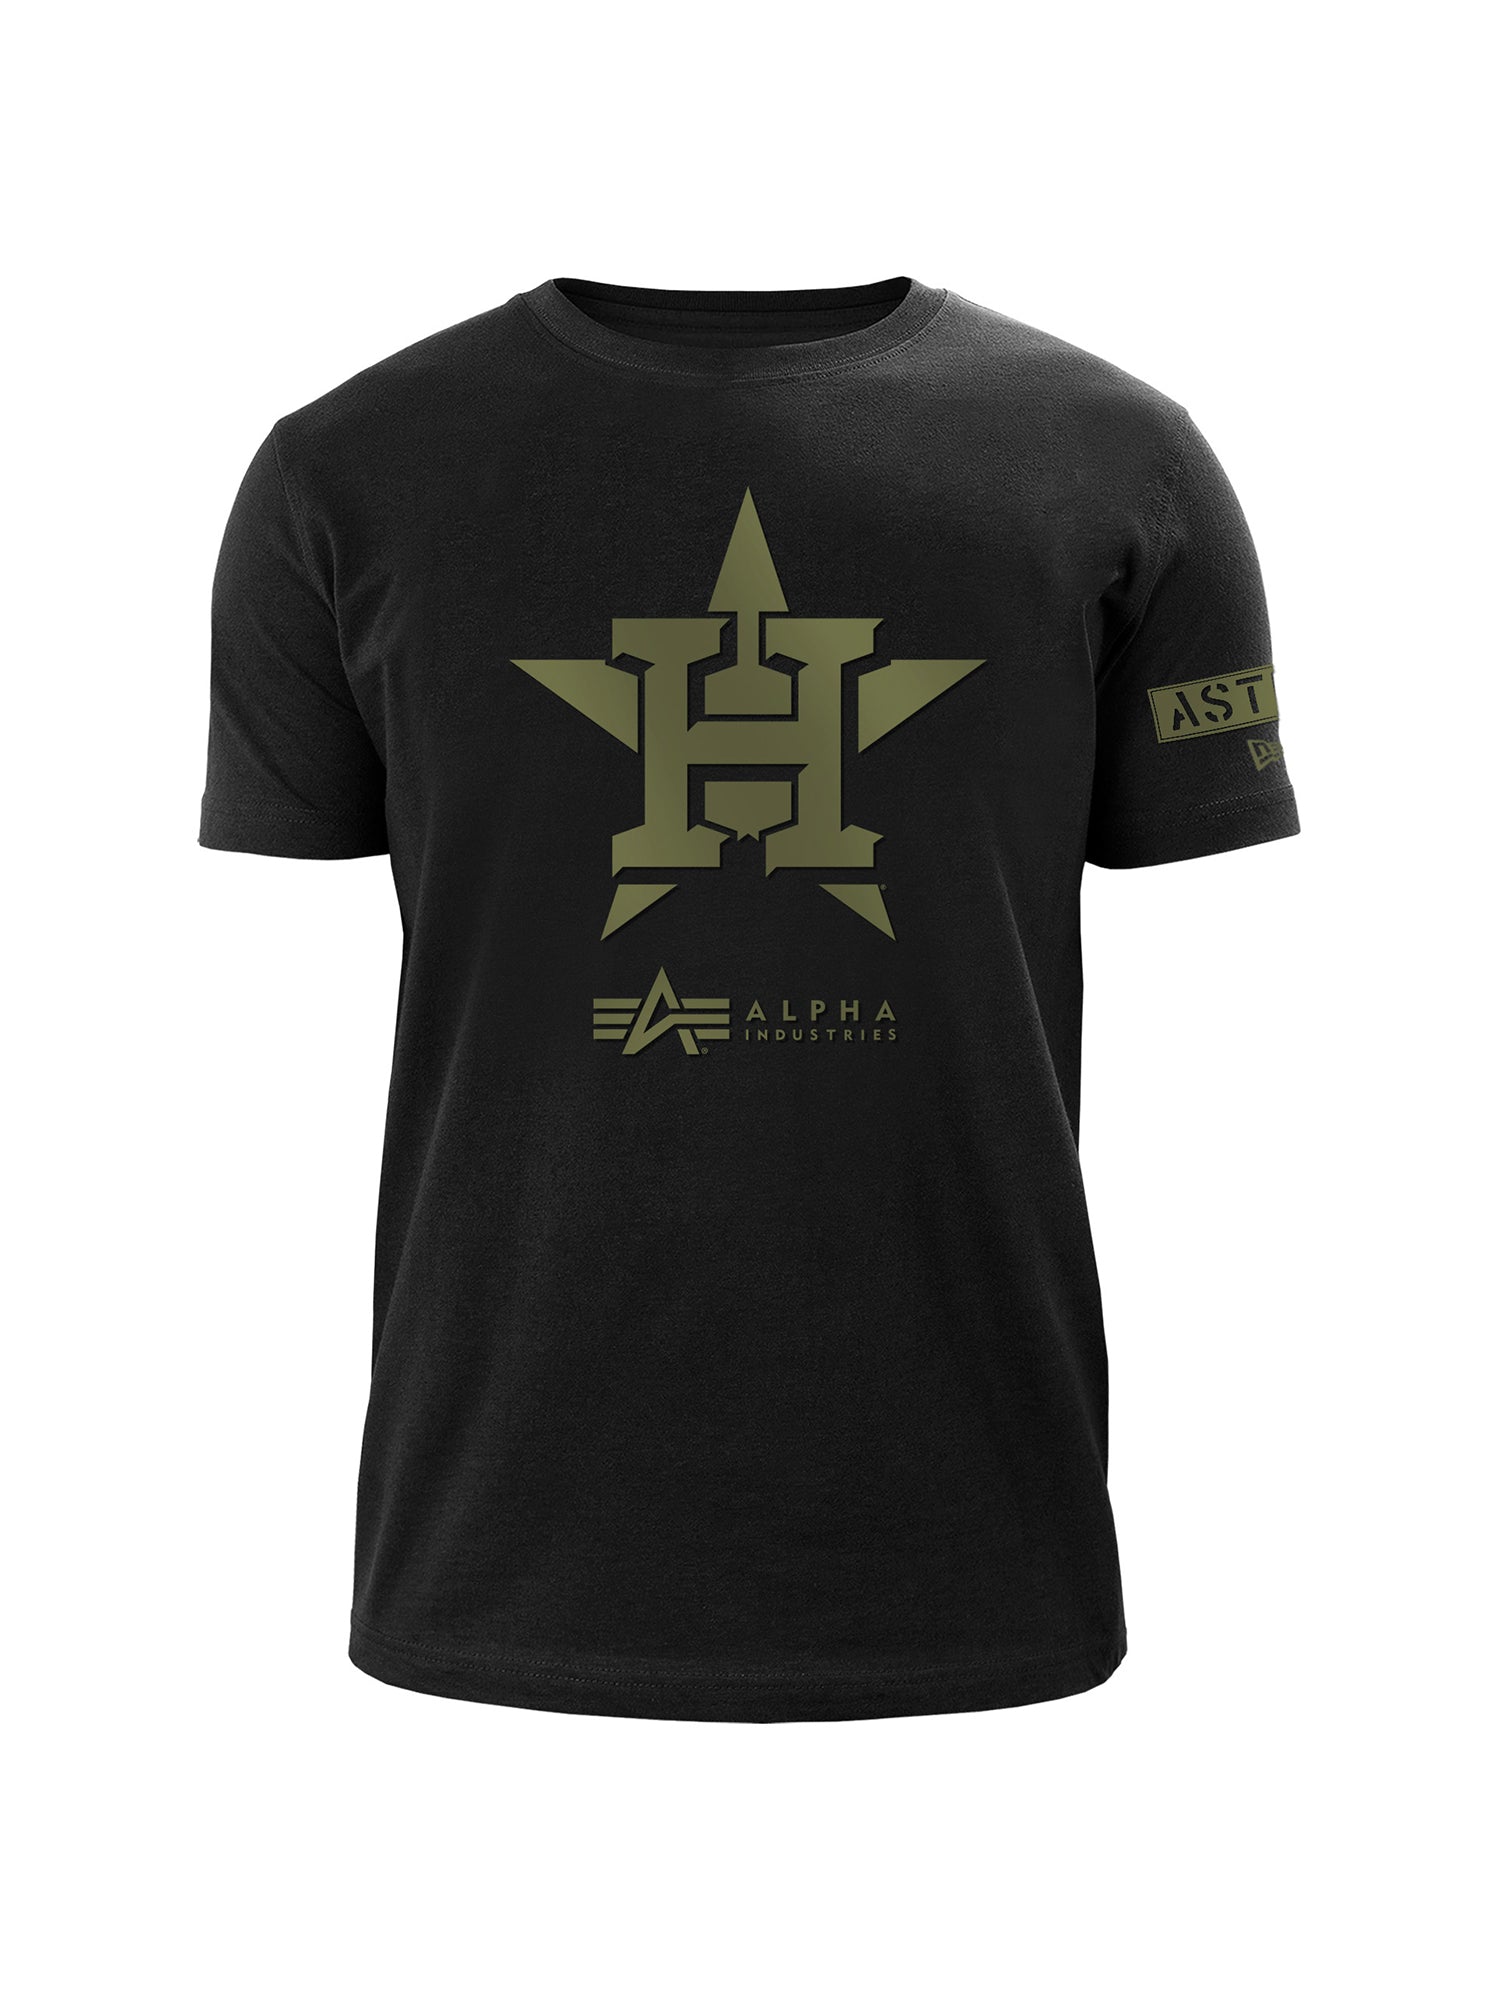 astros new t shirt